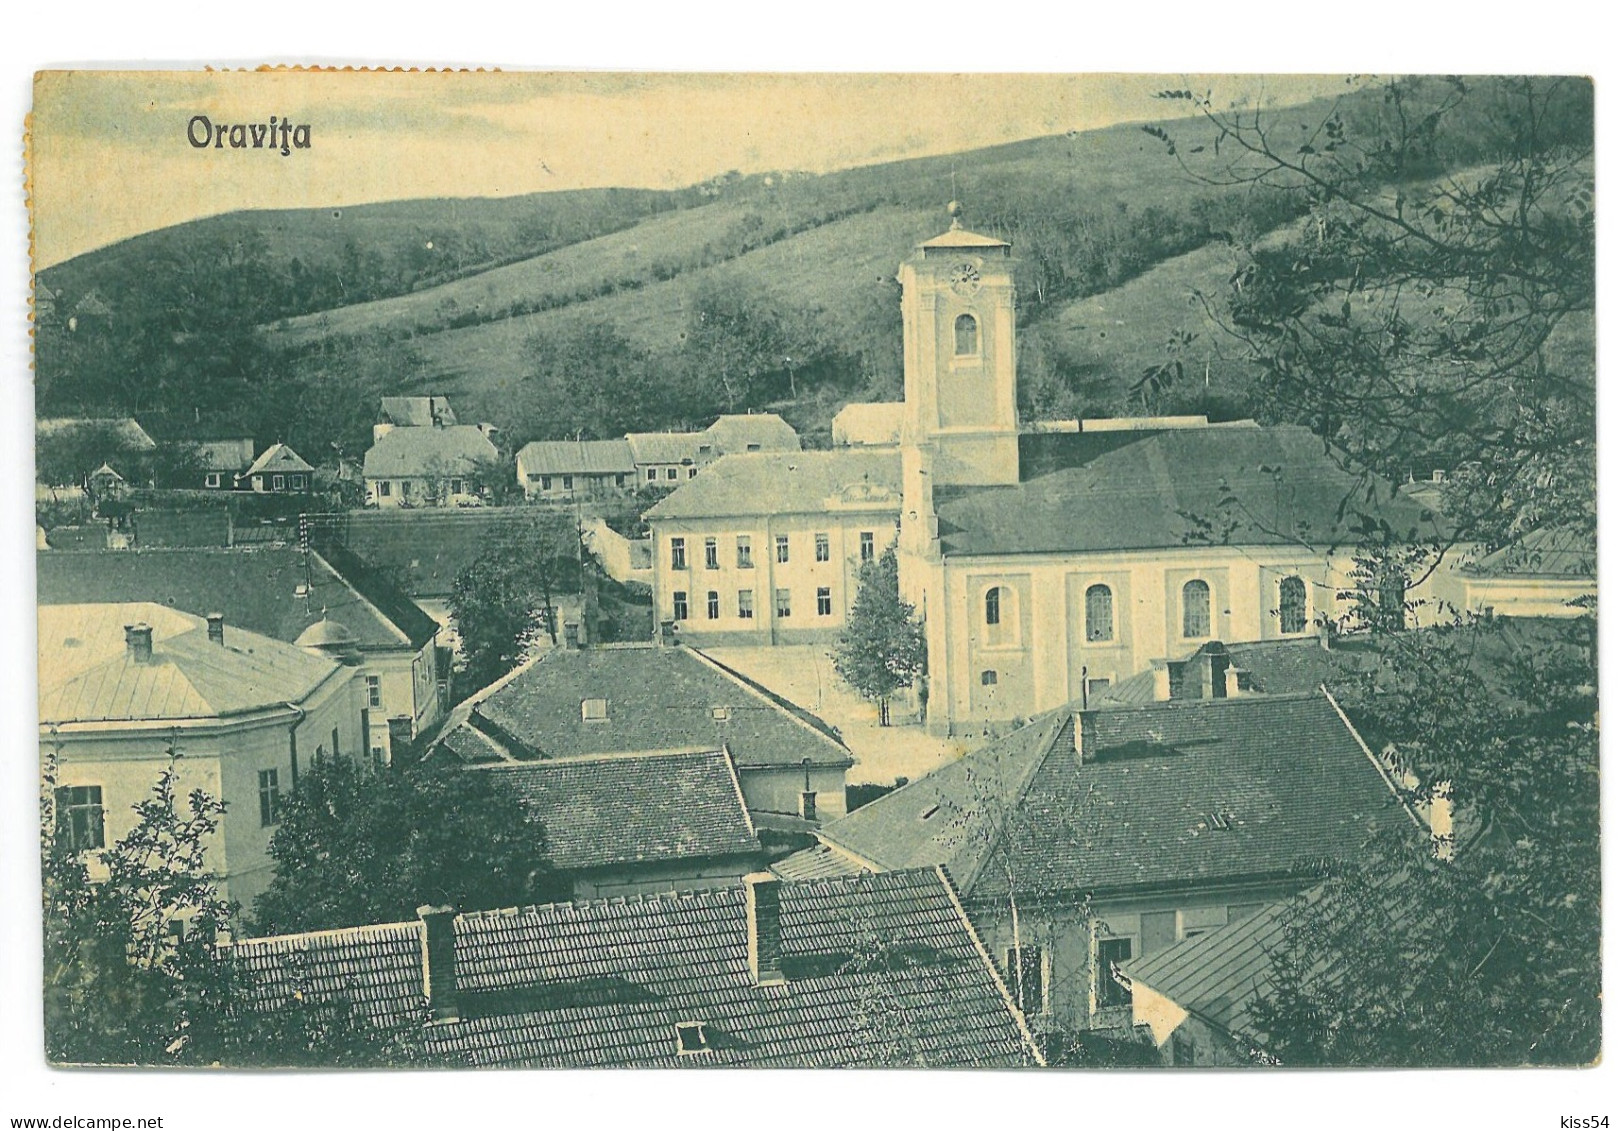 RO 45 - 20632 ORAVITA, Caras-Severin, Romania - Old Postcard - Used - 1923 - Rumänien